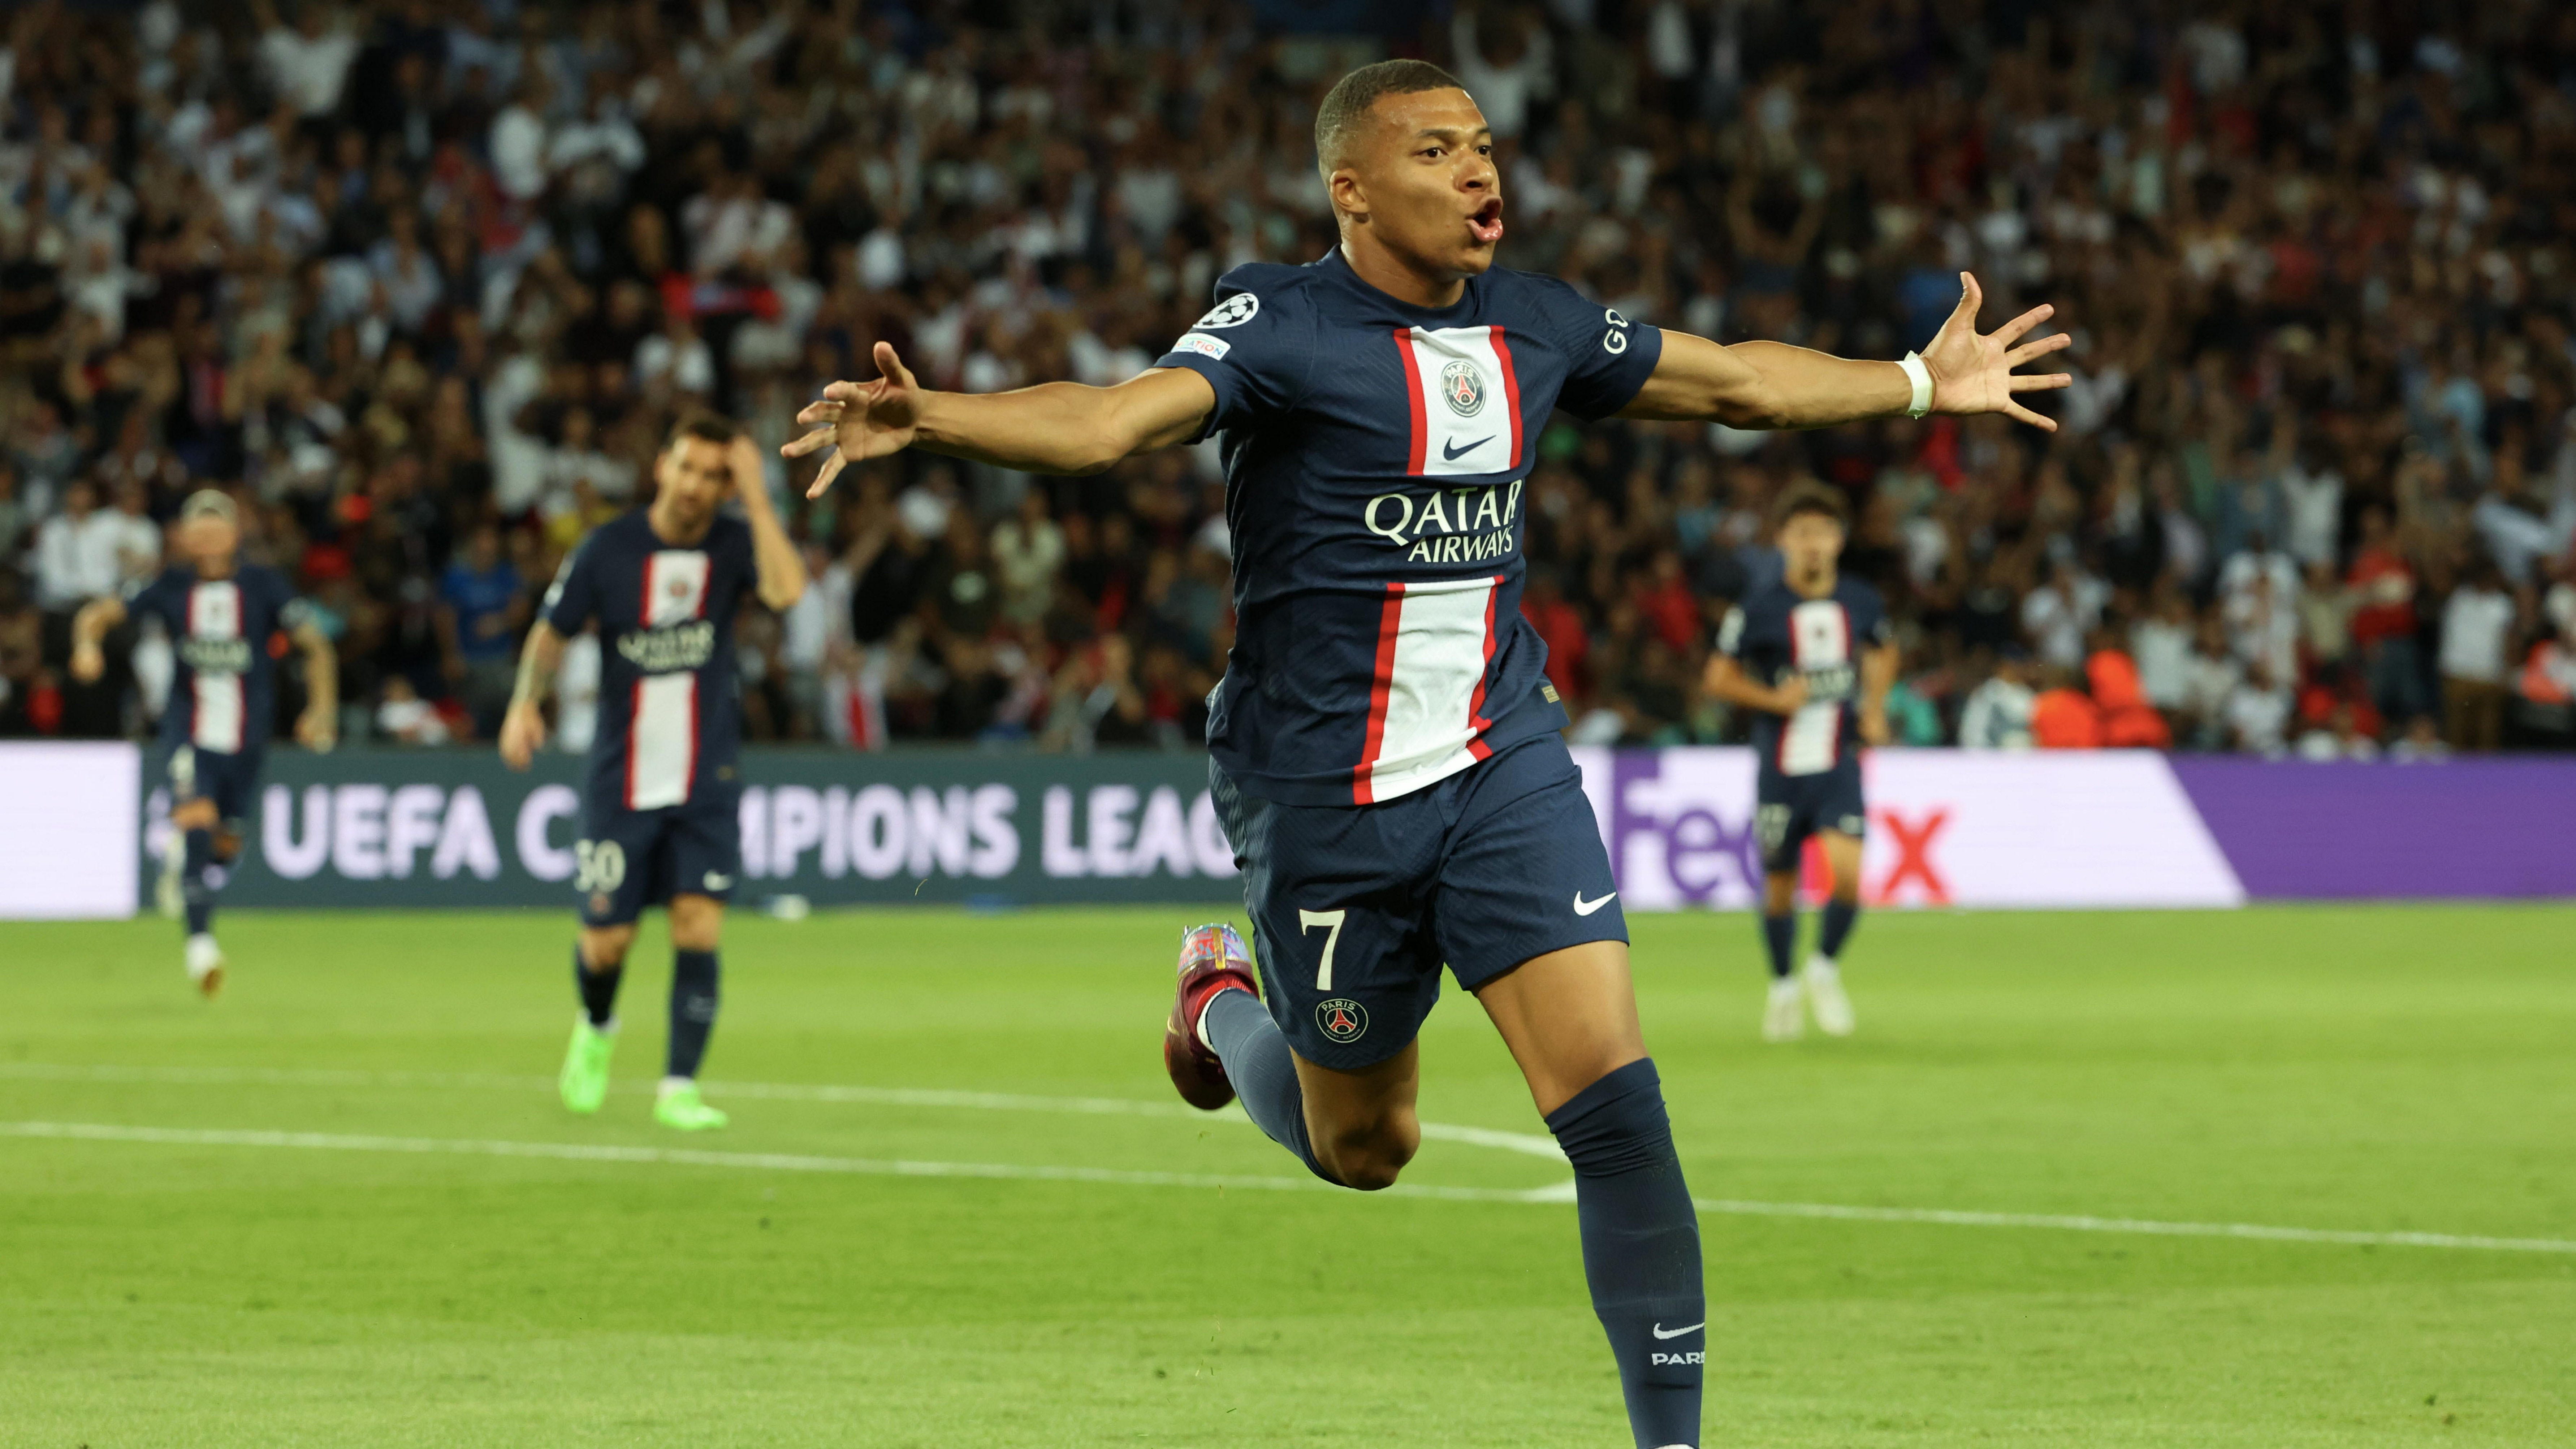 Paris Juventus Match Kylian Mbappé shines in Paris Saint-Germain's victory over Juventus in